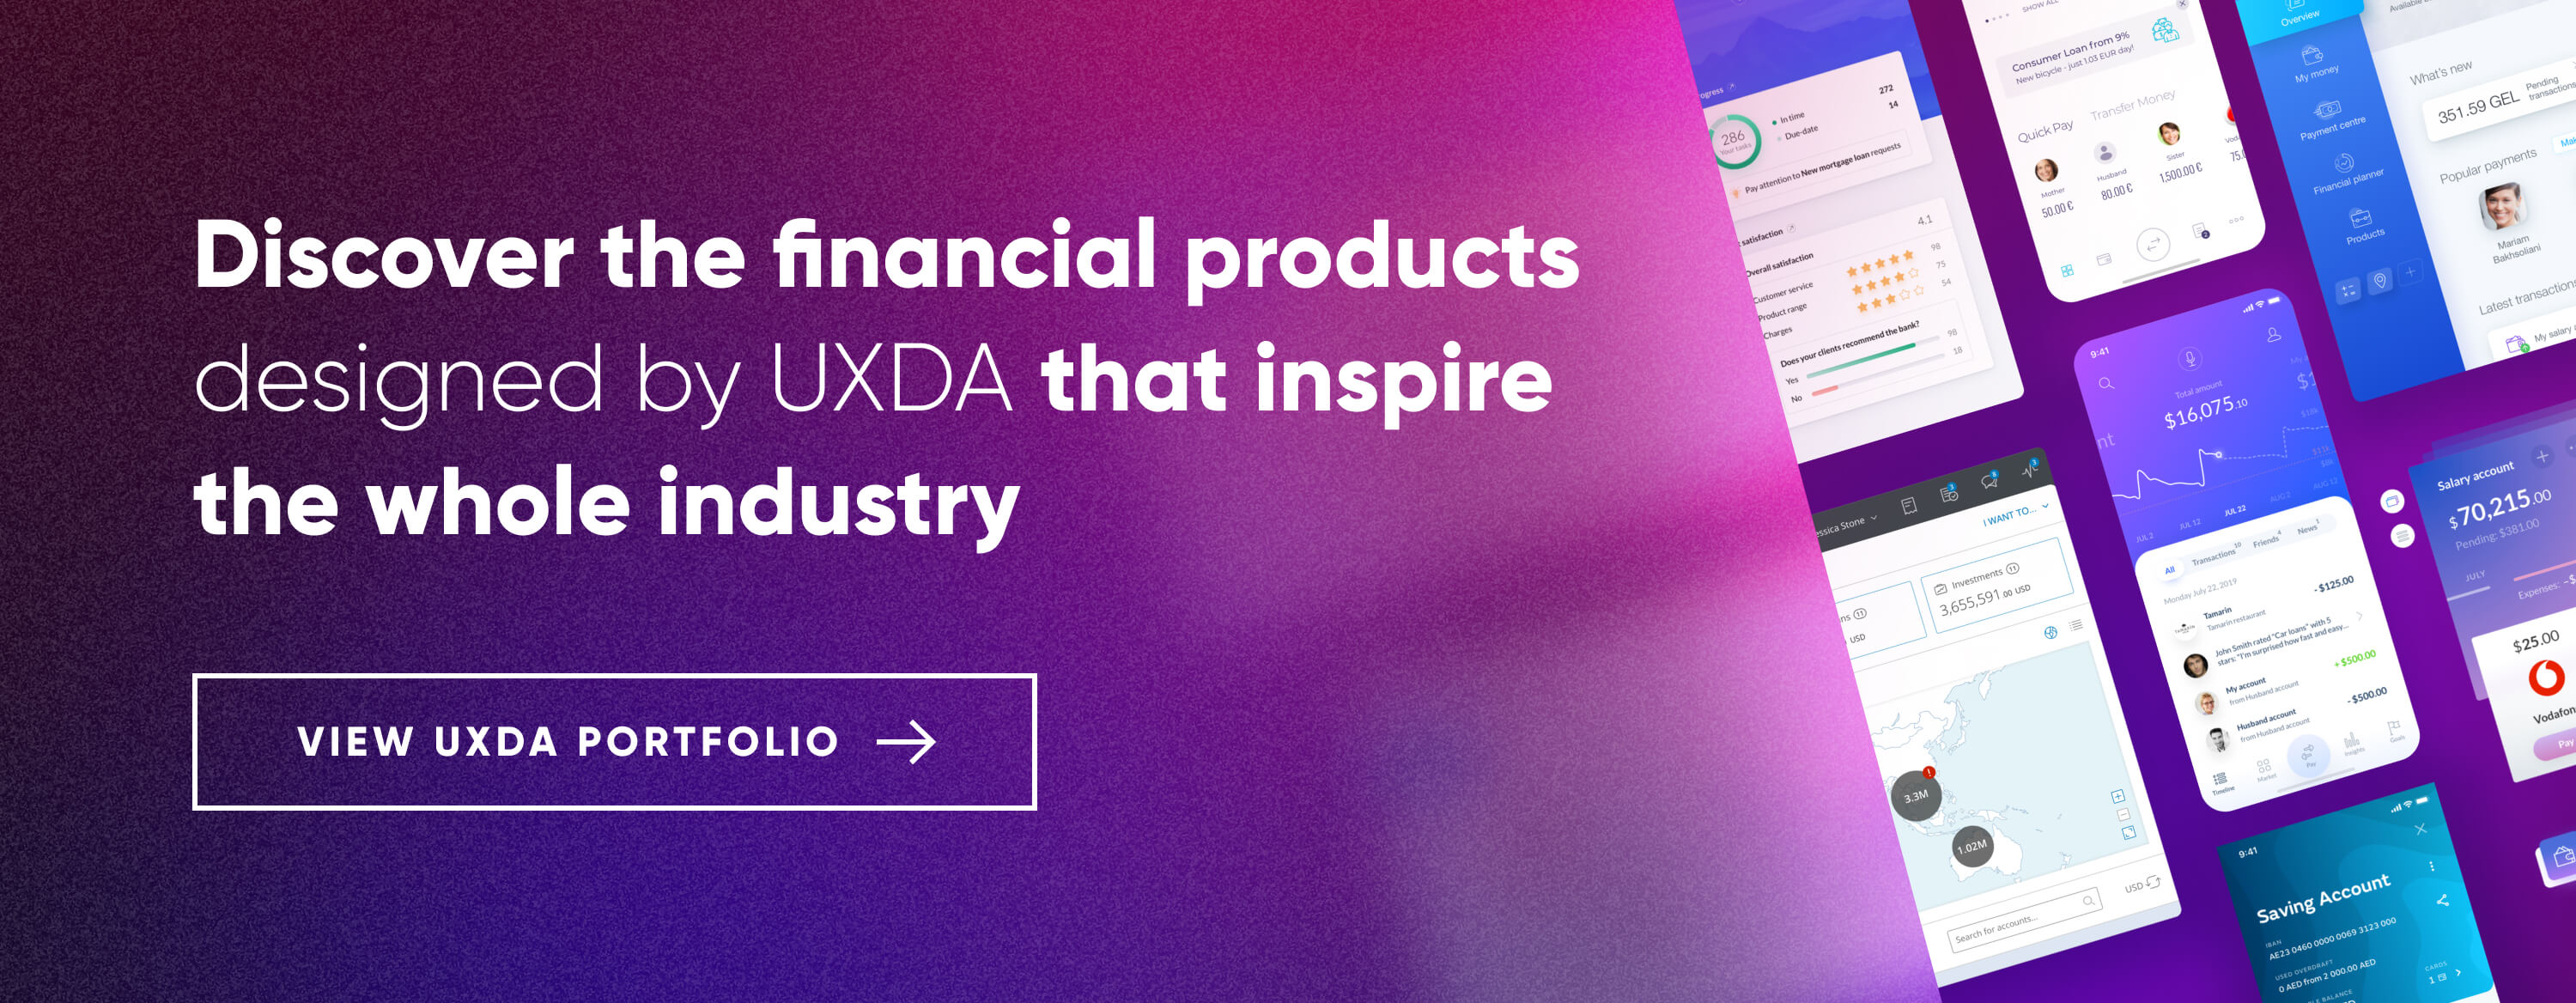 uxda-portfolio-financial-digital-product-inspire-industry-ux-1669639642.jpg